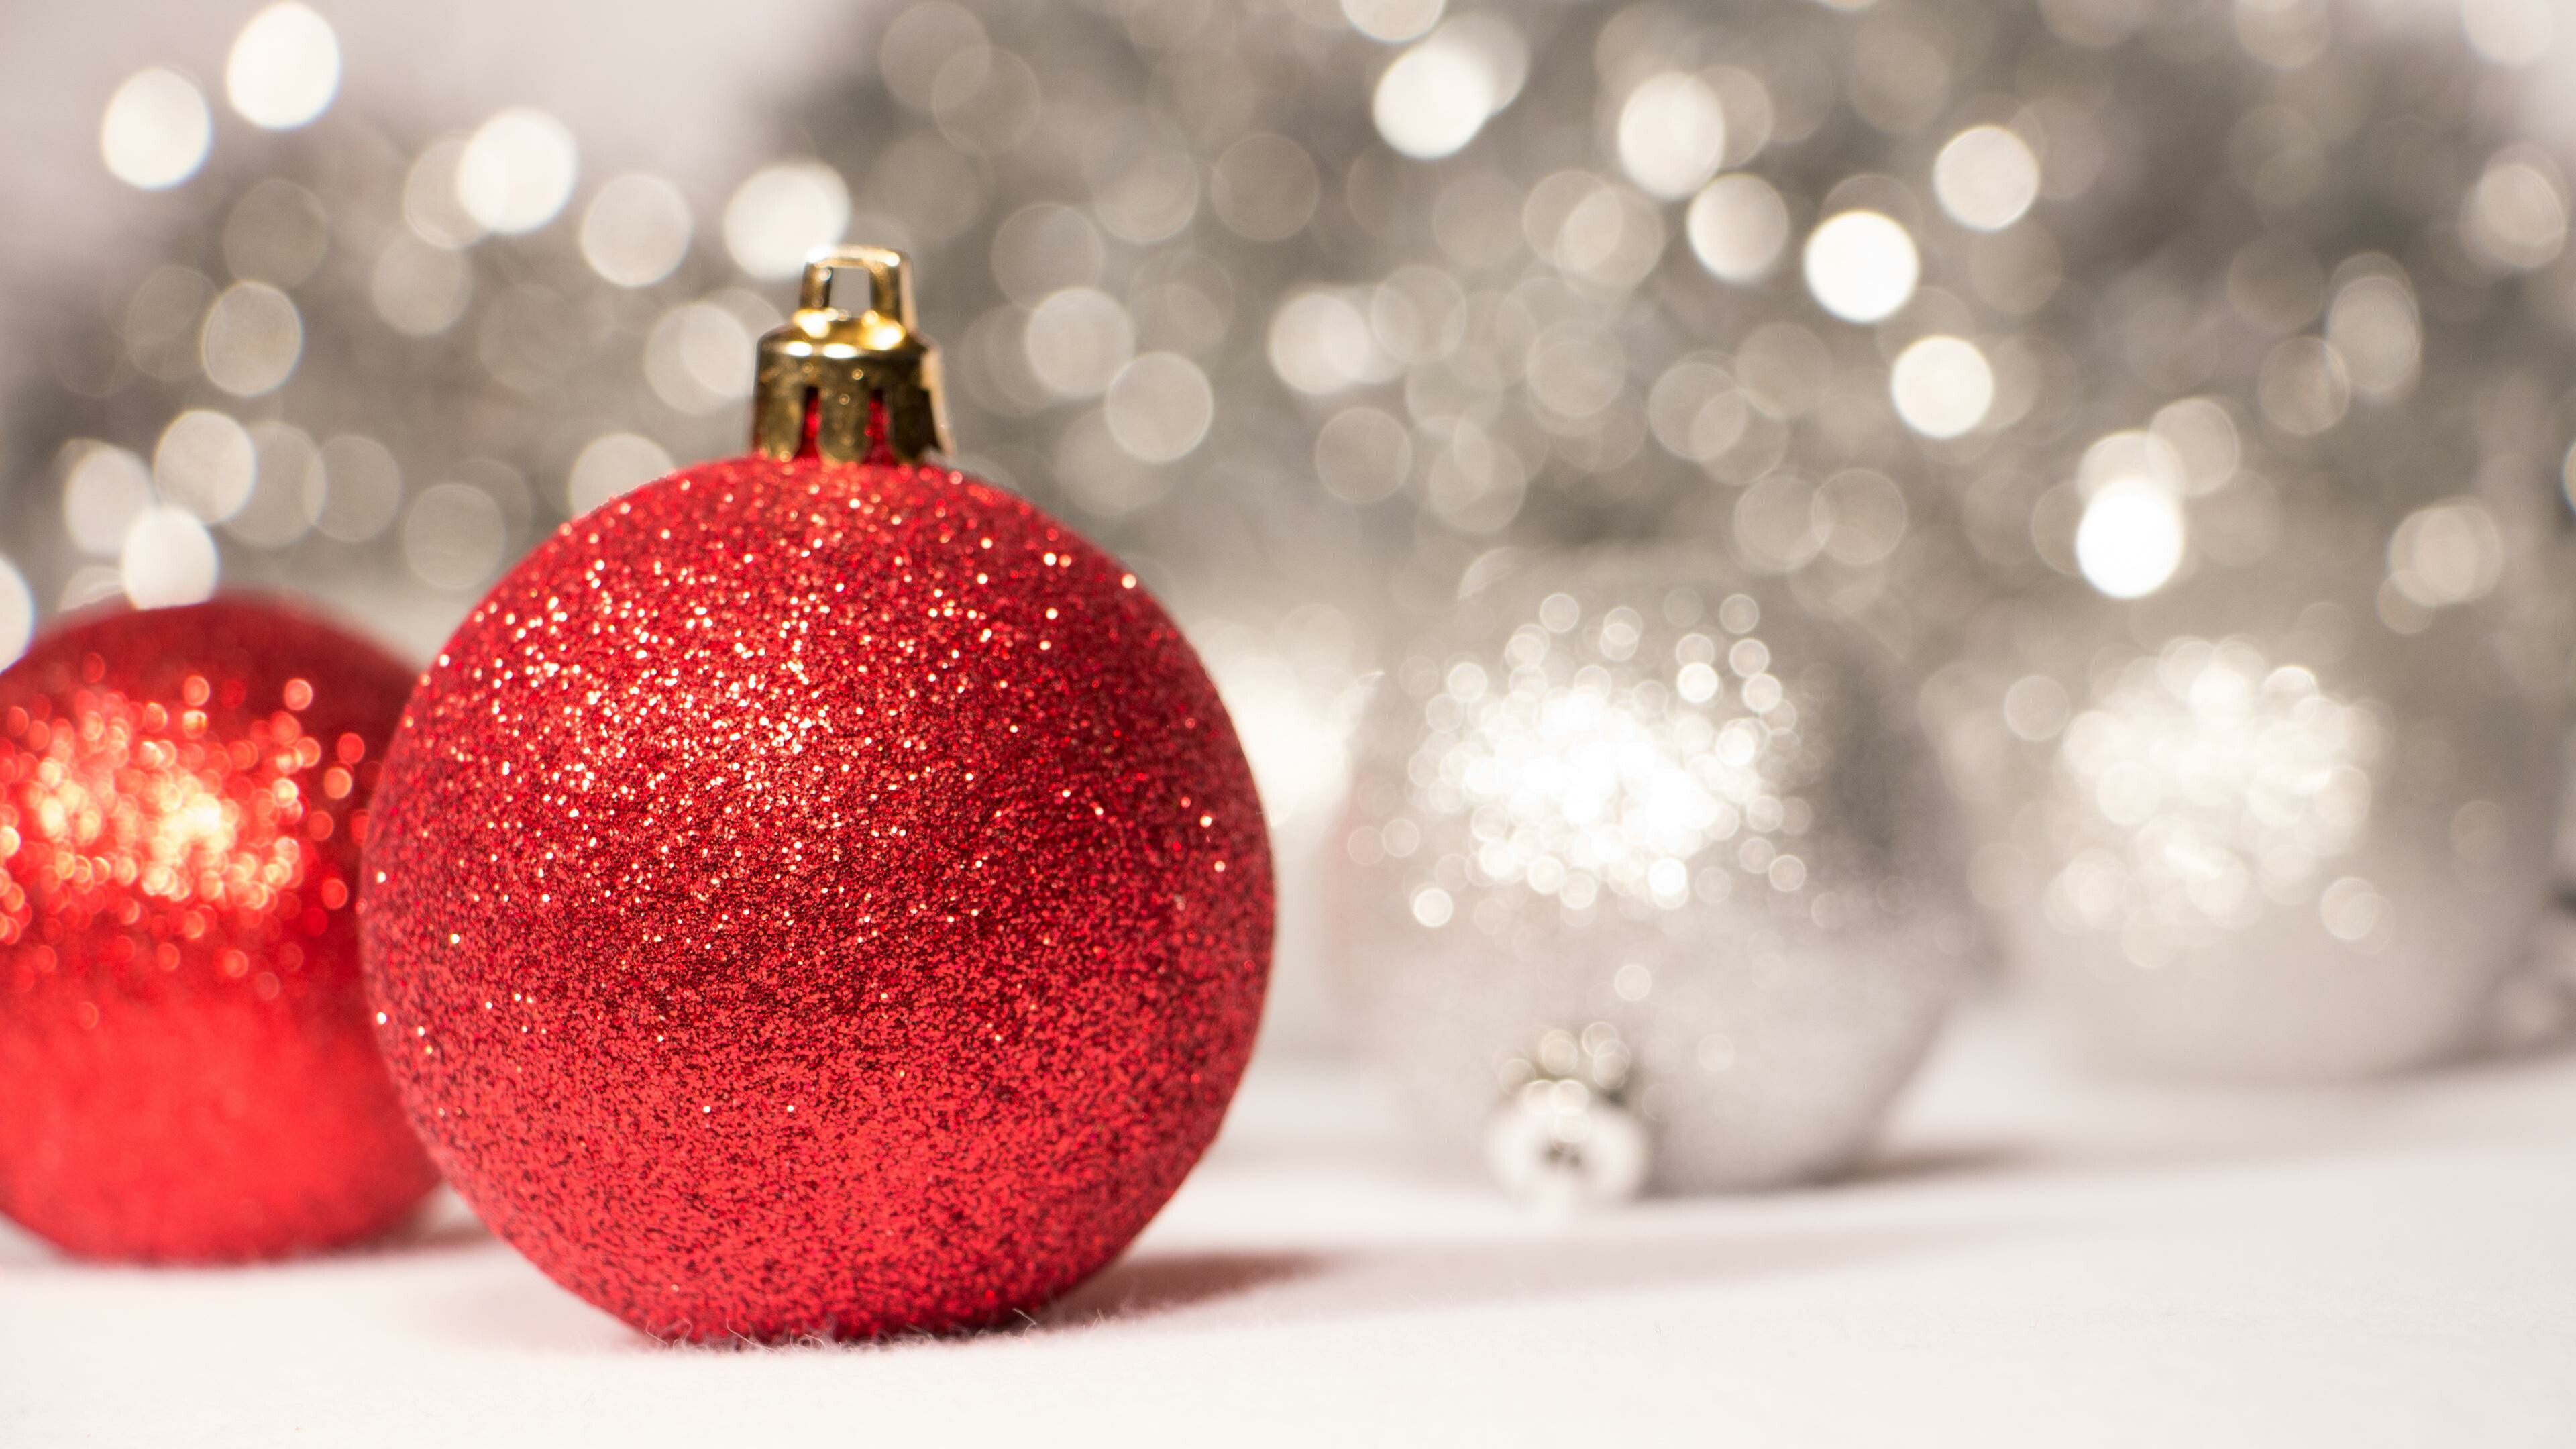 Christmas Ornament: Holiday, Glitter, Globes, Festive. 3840x2160 4K Wallpaper.